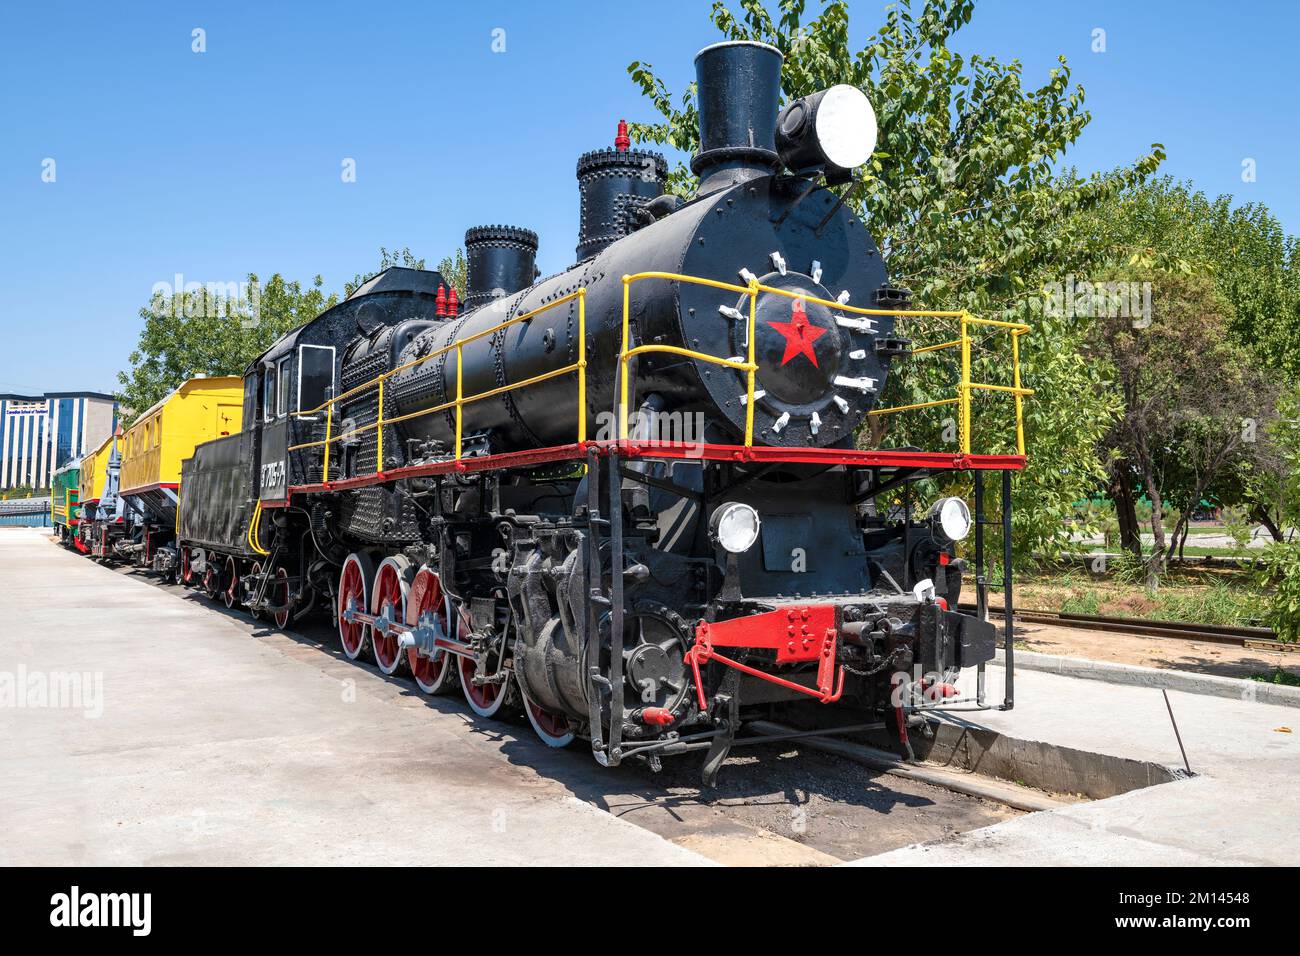 TASHKENT, UZBEKISTAN - SEPTEMBER 04, 2022: Old Soviet steam locomotive of the Eu series (type E, reinforced) in the railway transport museum Stock Photo